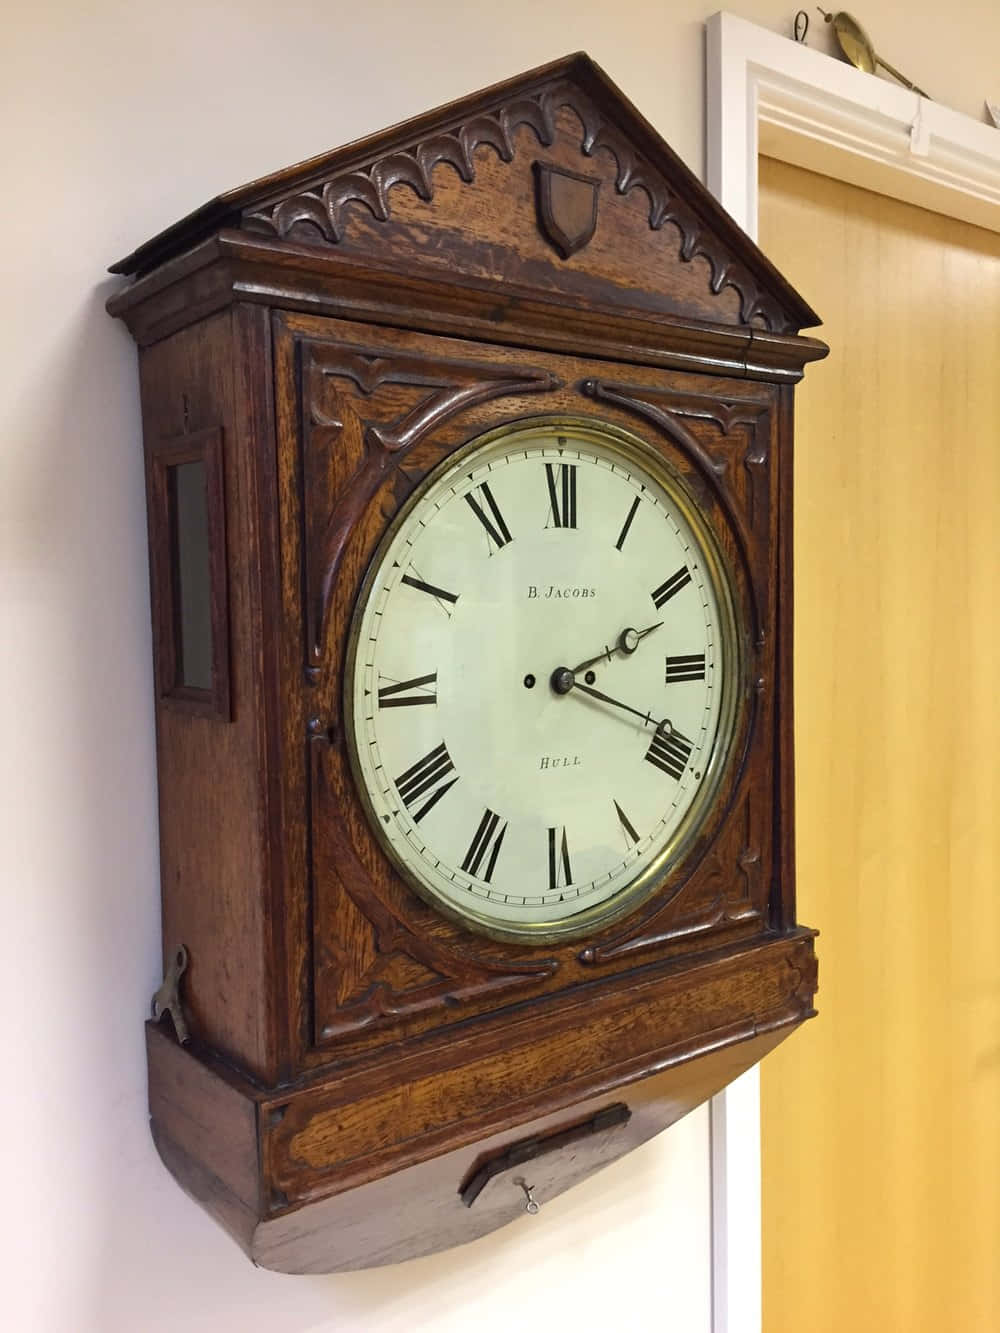 Decorative clock face with vintage design